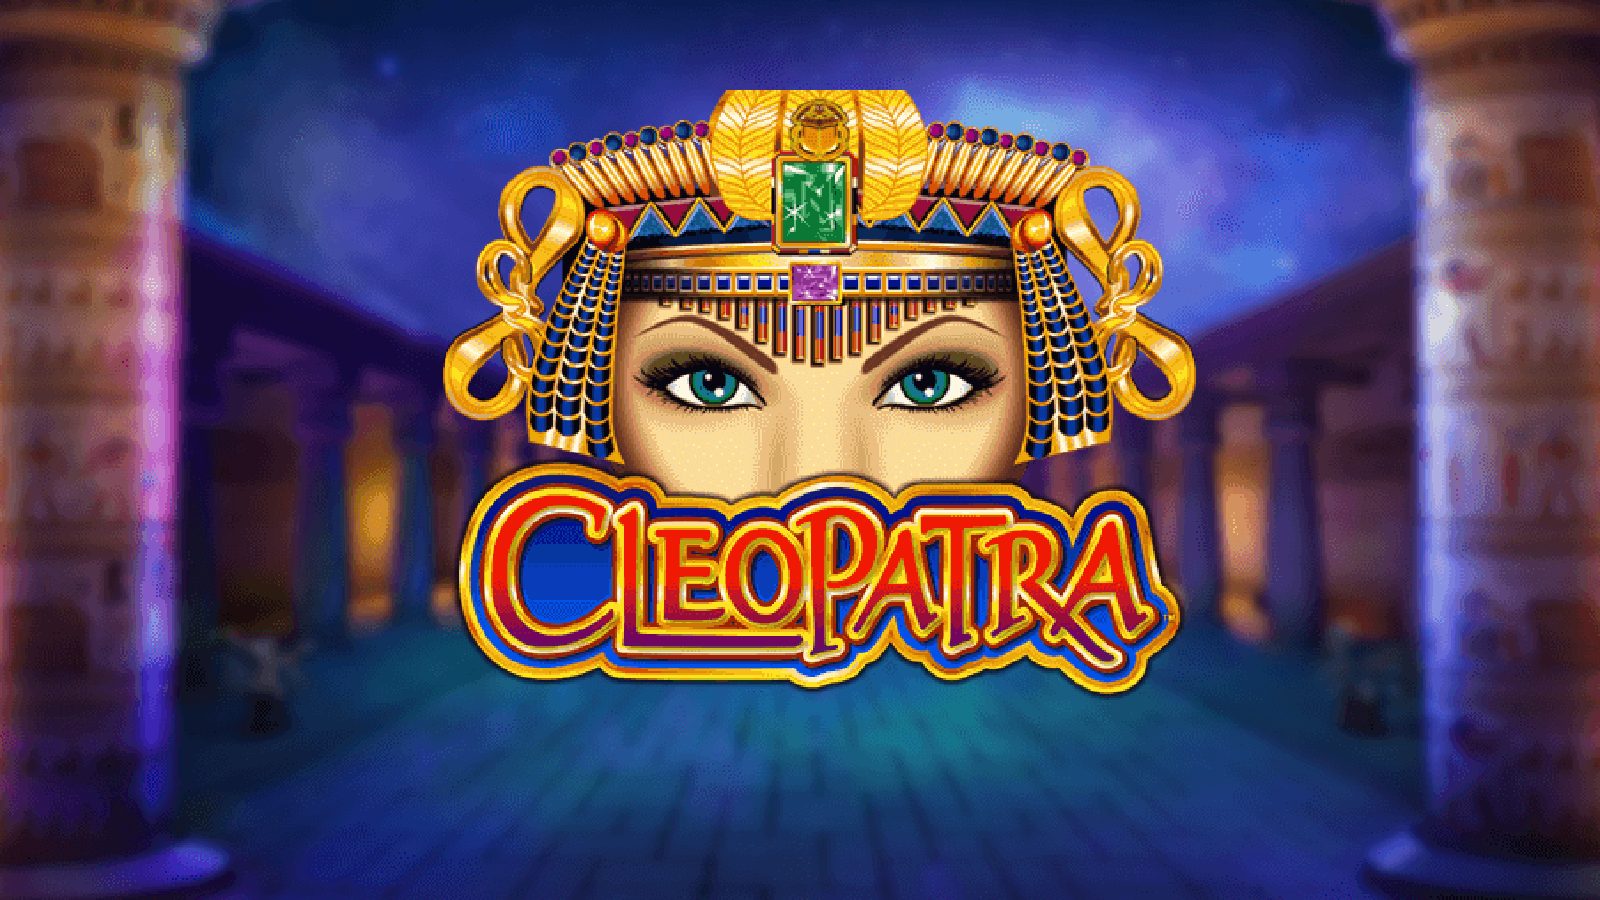 IGT - Cleopatra Slot Review